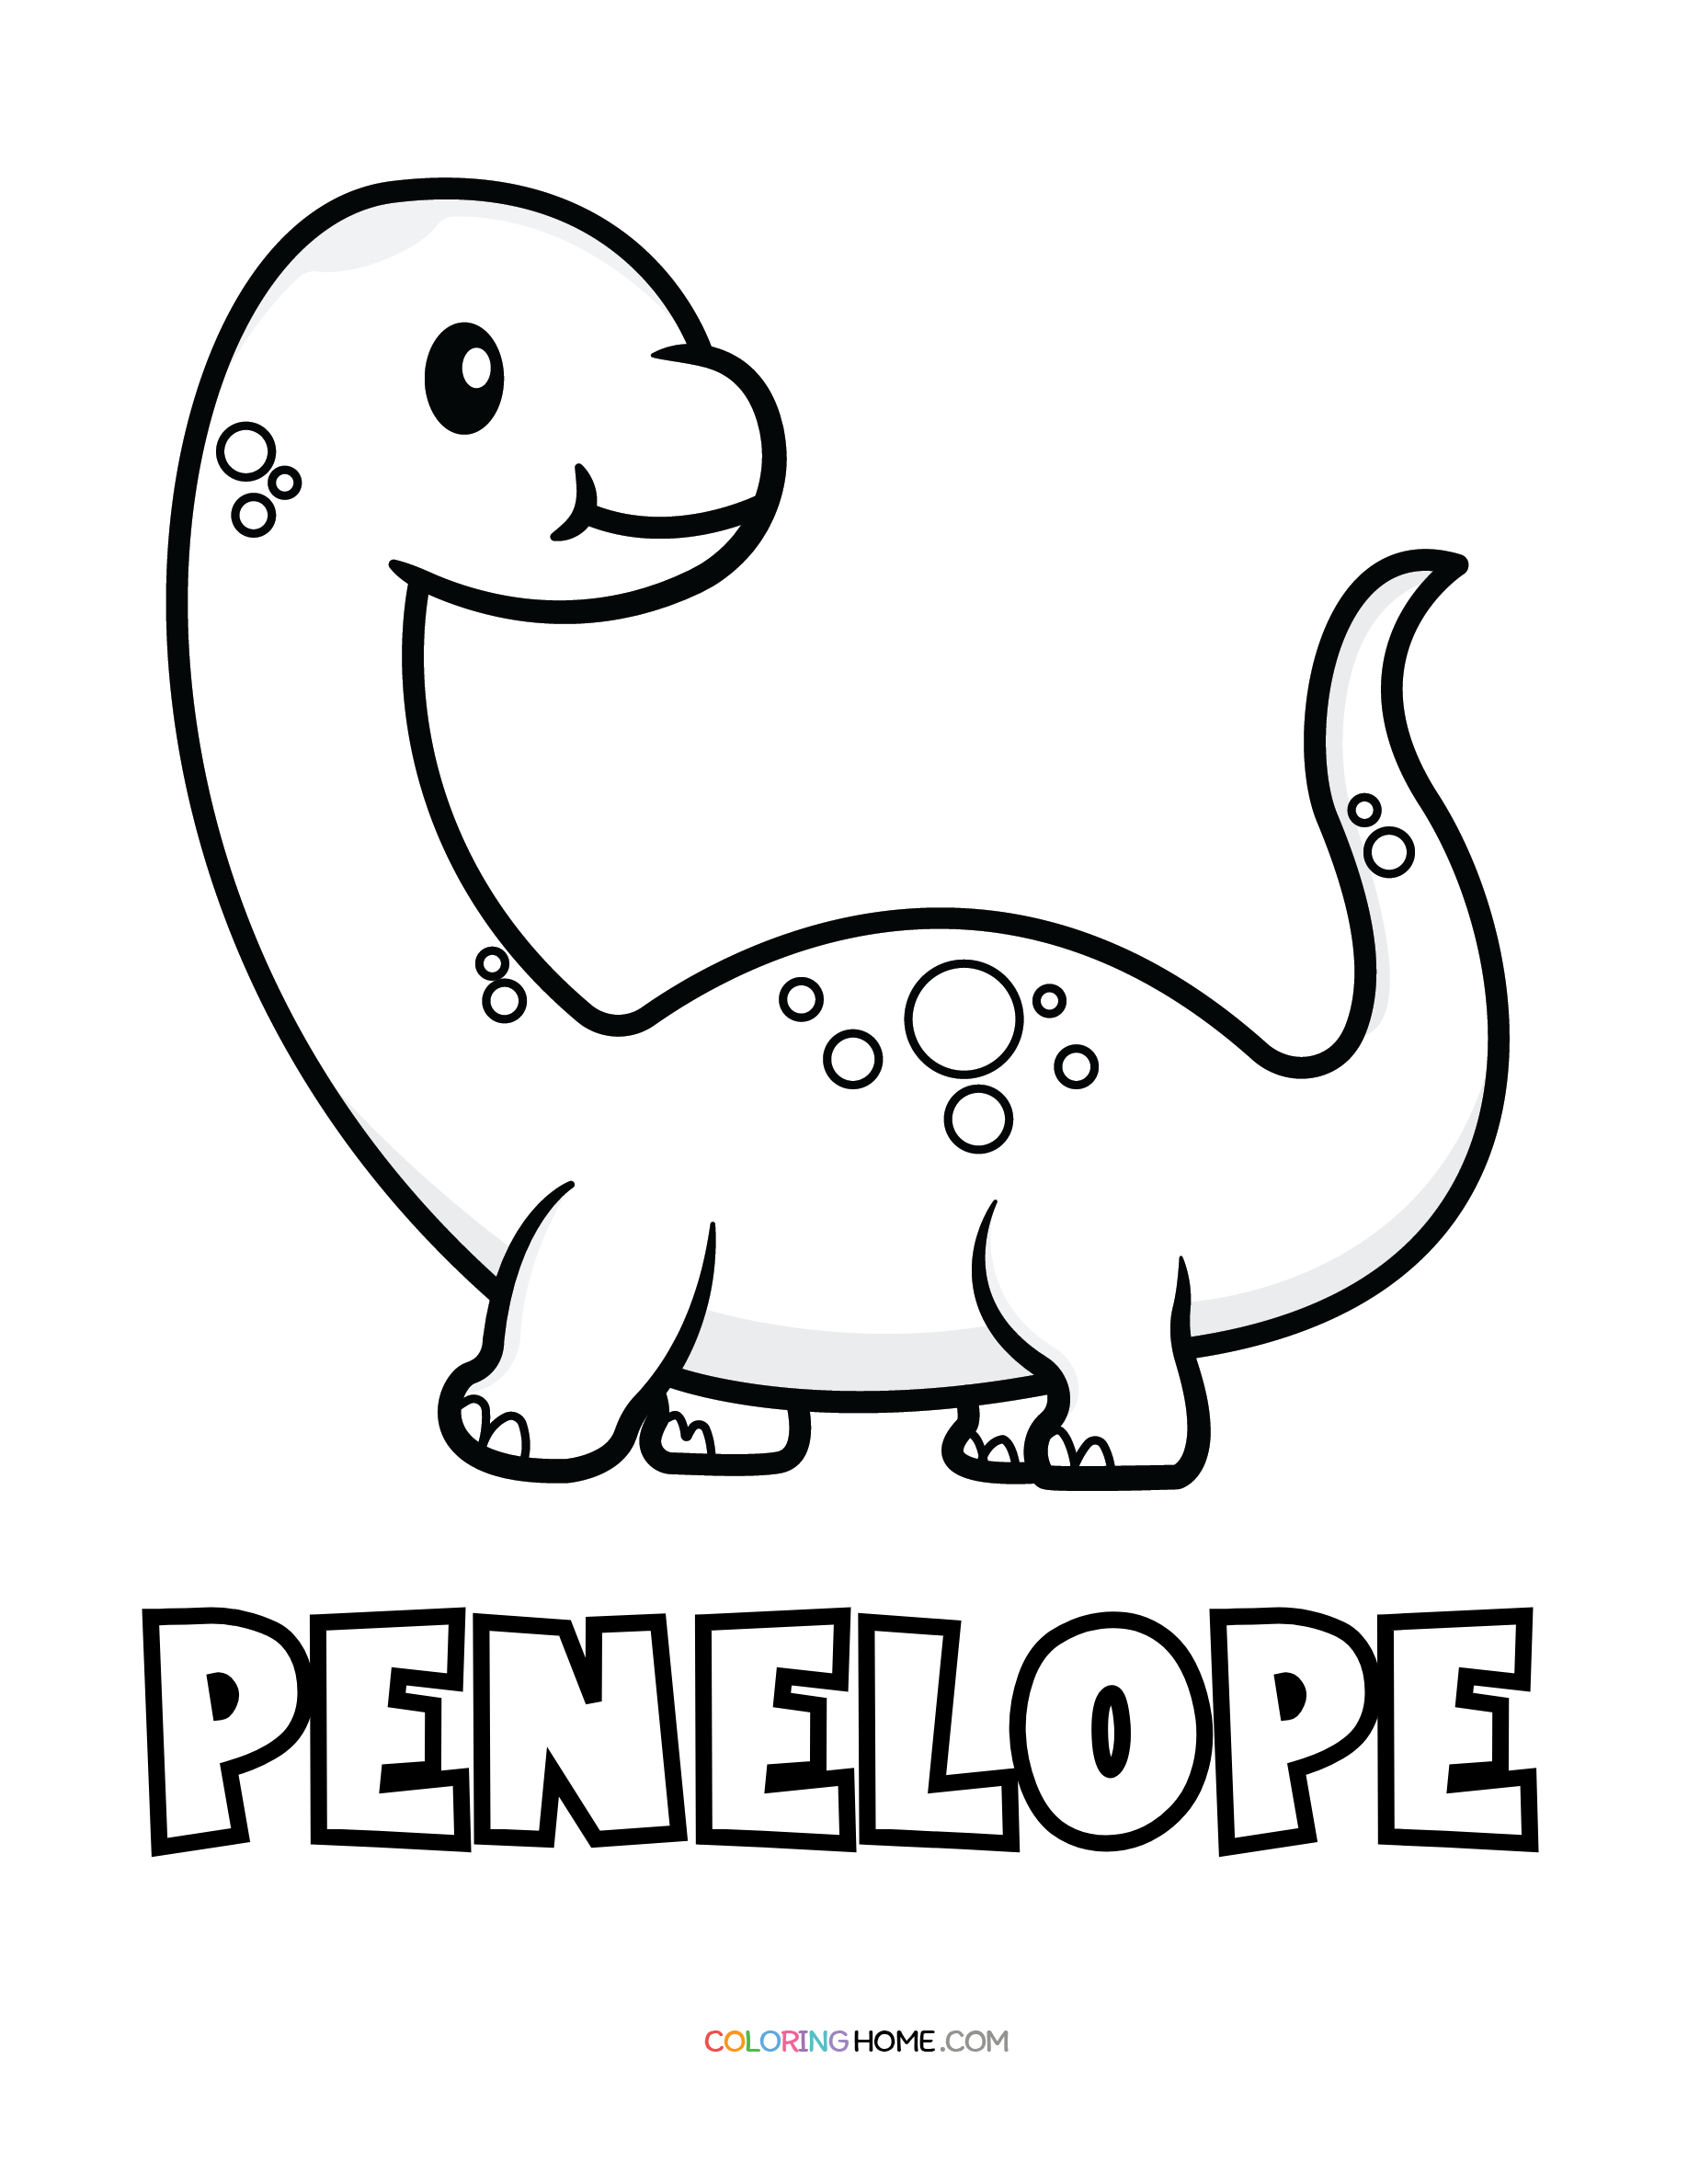 Penelope dinosaur coloring page